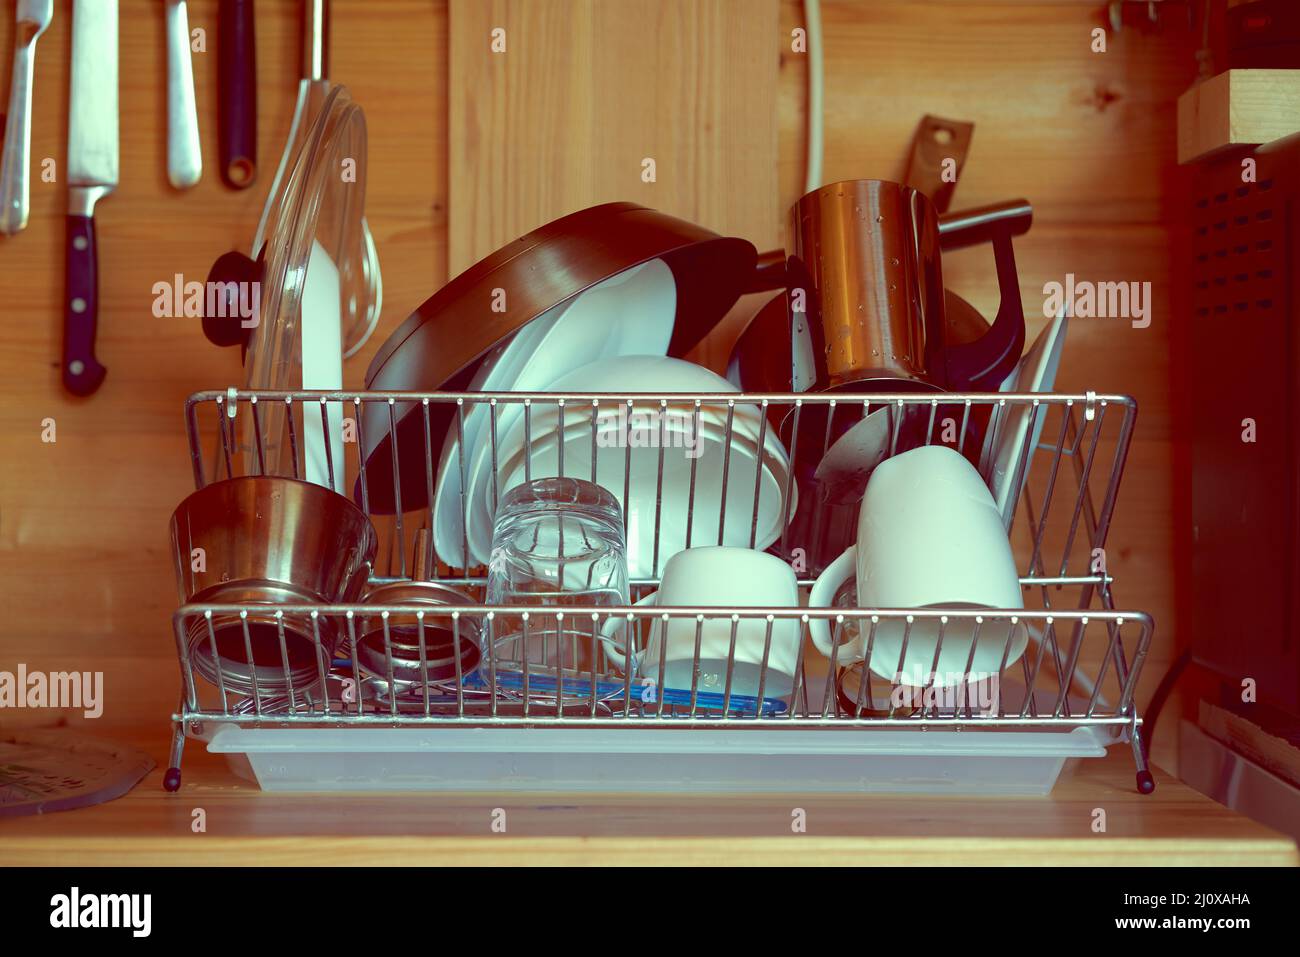 https://c8.alamy.com/comp/2J0XAHA/pure-cleaned-crockery-placed-on-dryer-washed-after-breakfast-in-kitchen-2J0XAHA.jpg